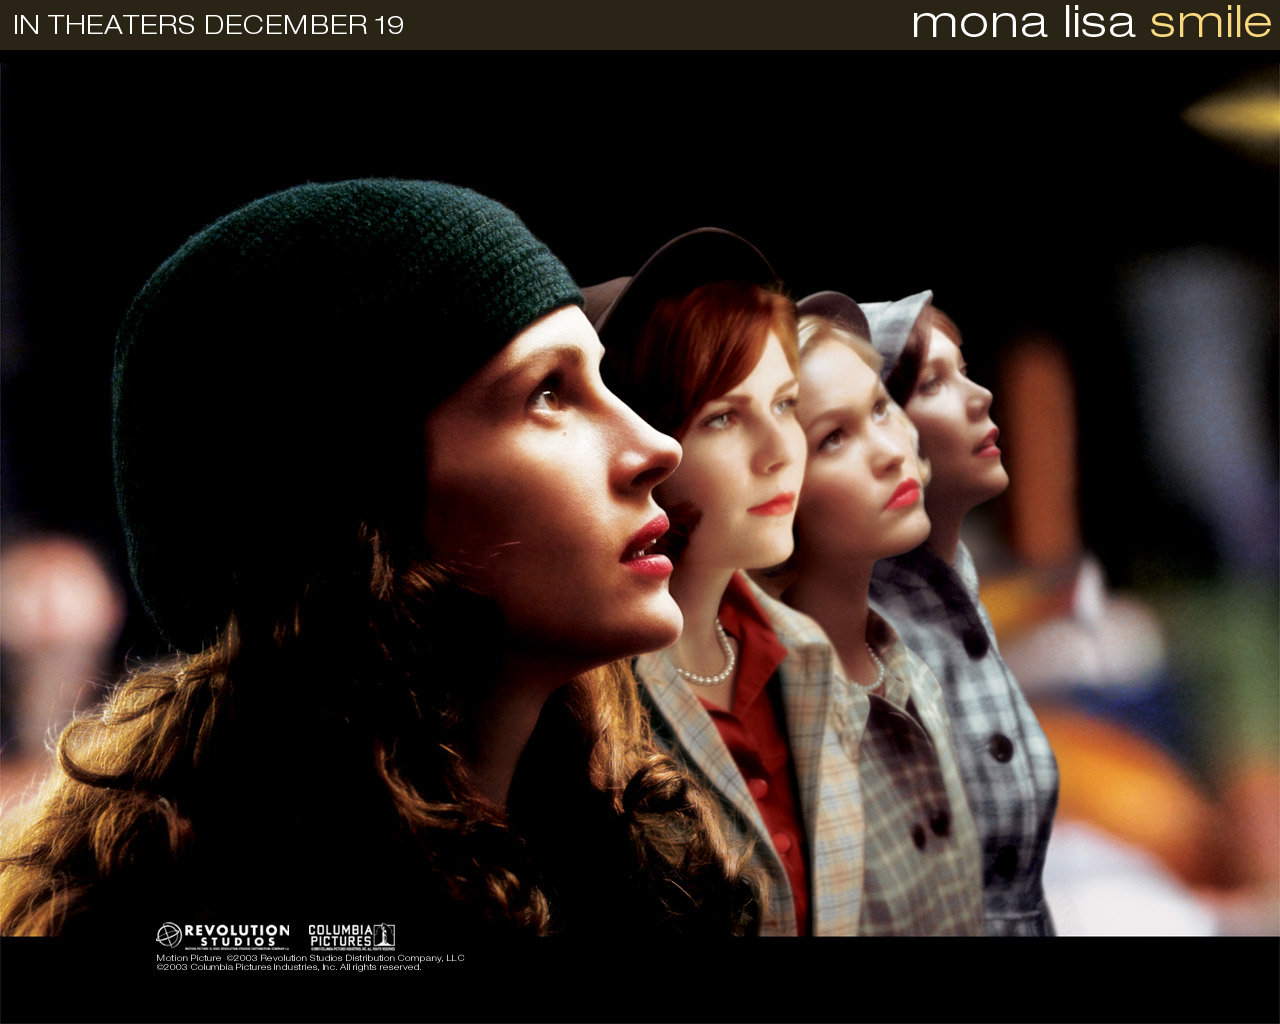 Mona Lisa Smile Desktop Wallpaper For HD Widescreen And